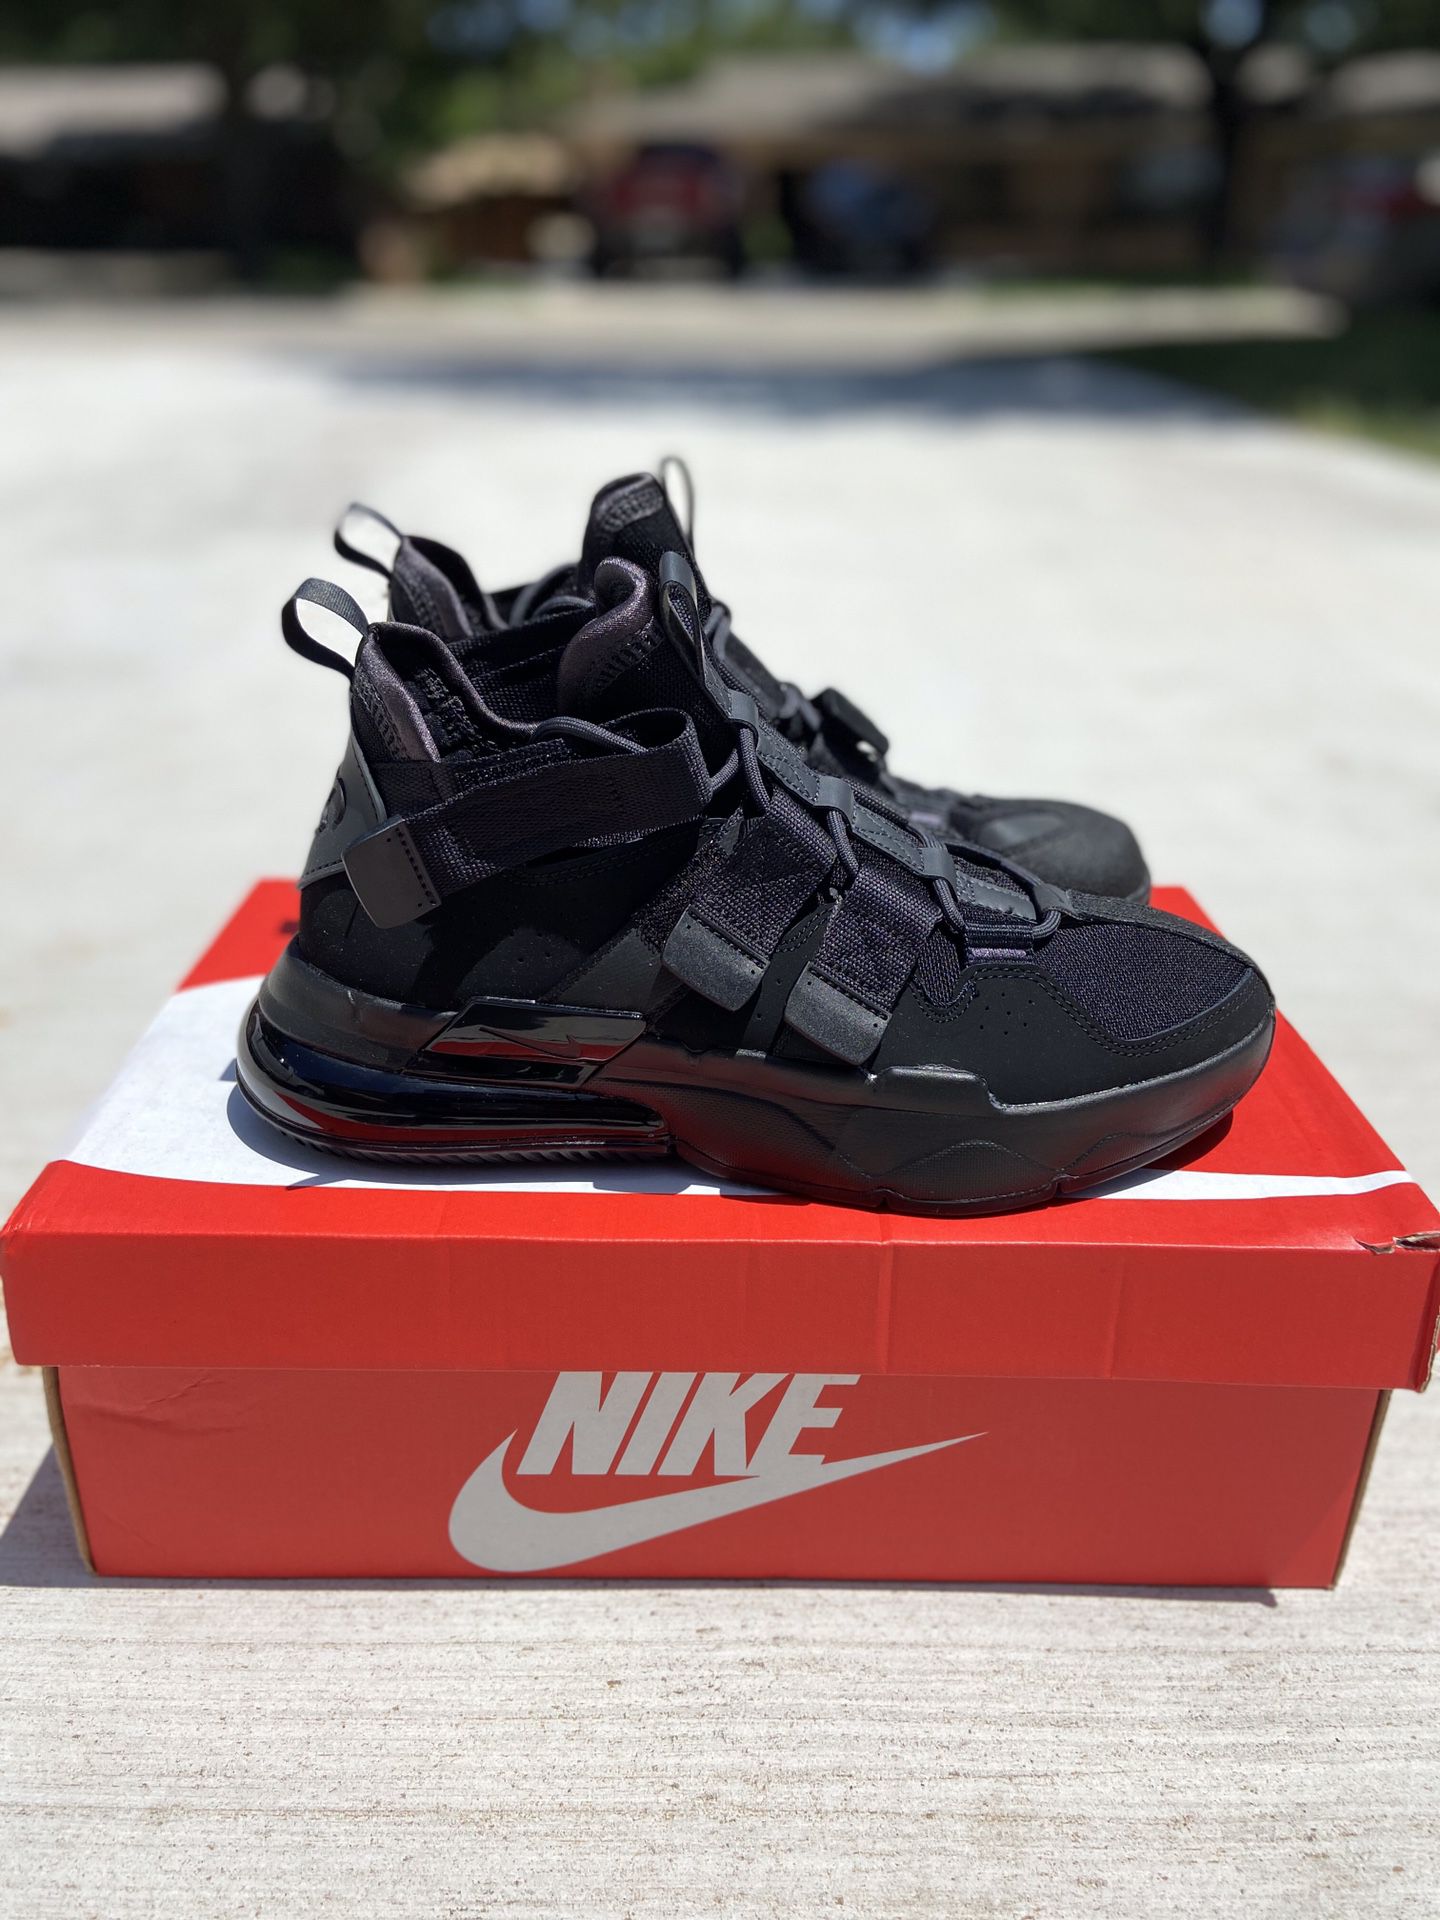 Nike Air Max Edge 270 Triple Black Sneakers (Men’s Size 9.5)